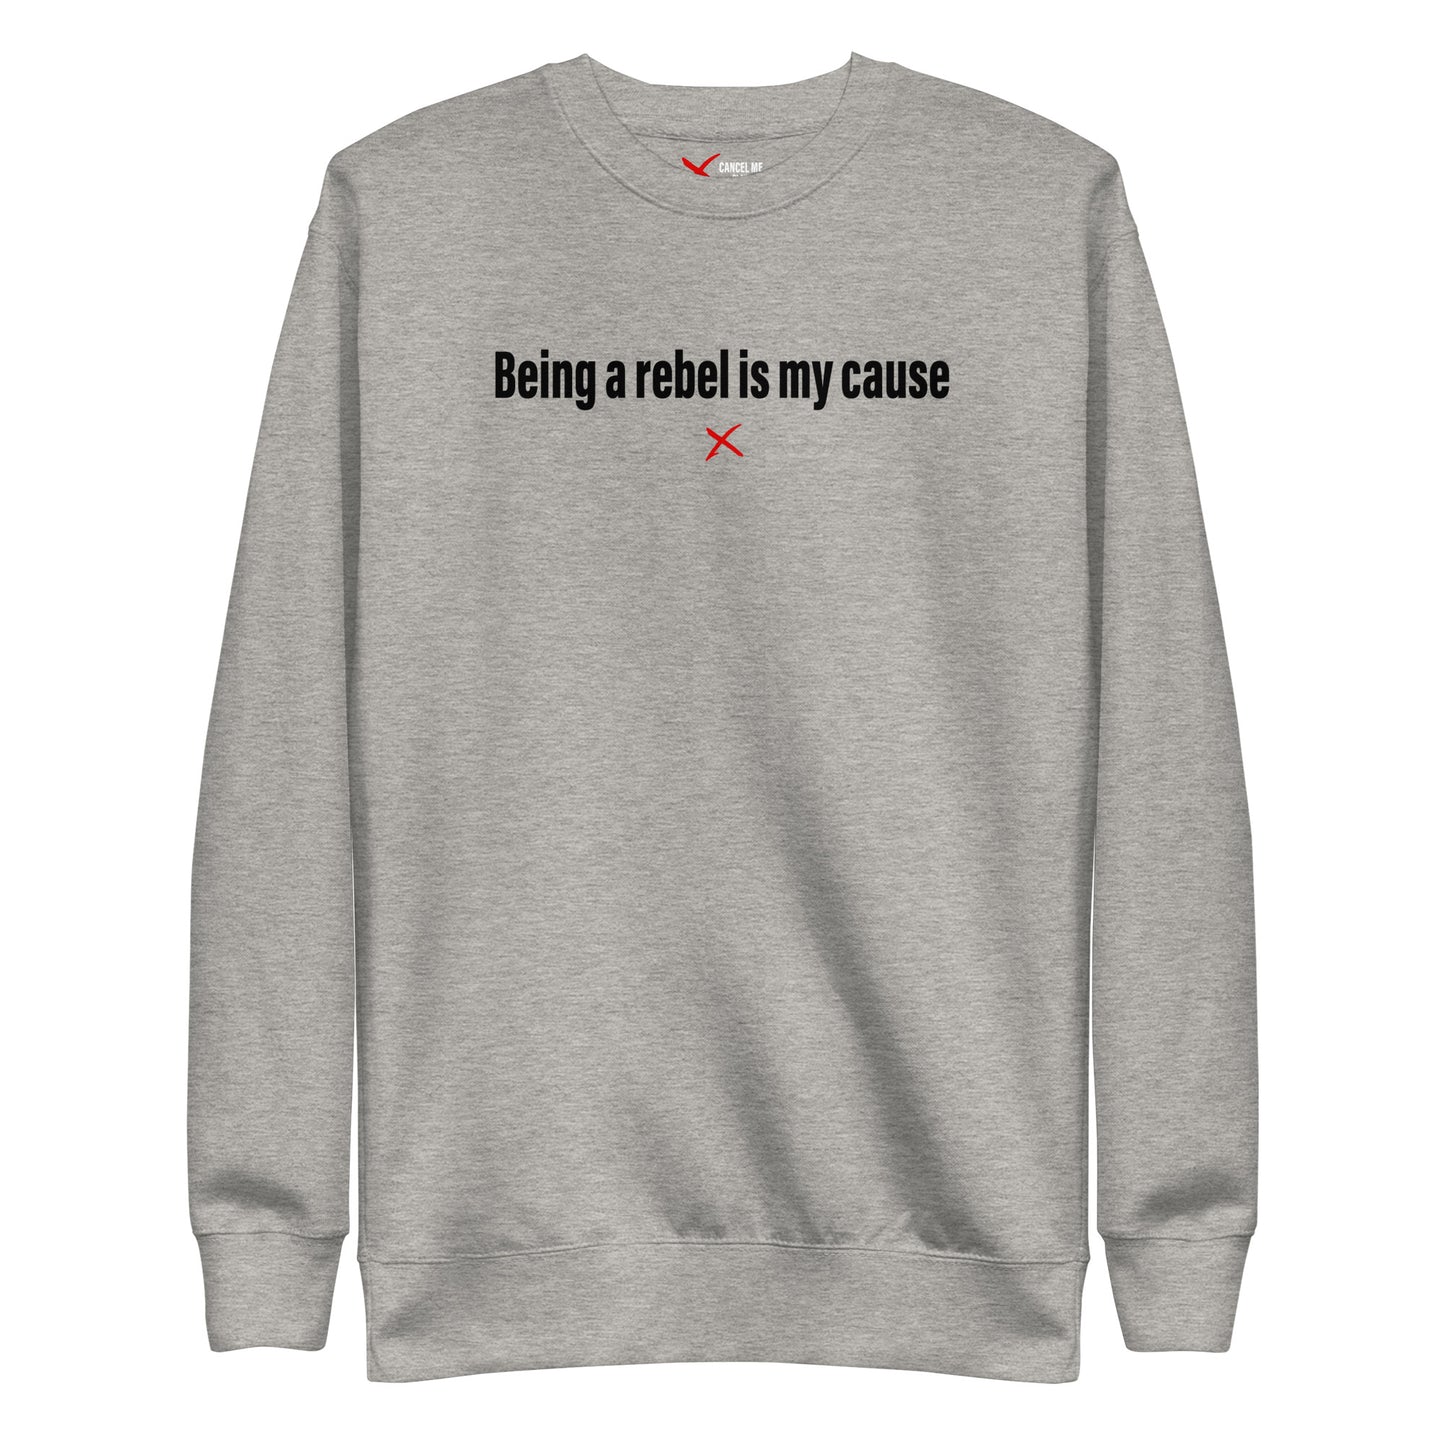 Being a rebel is my cause - Sweatshirt